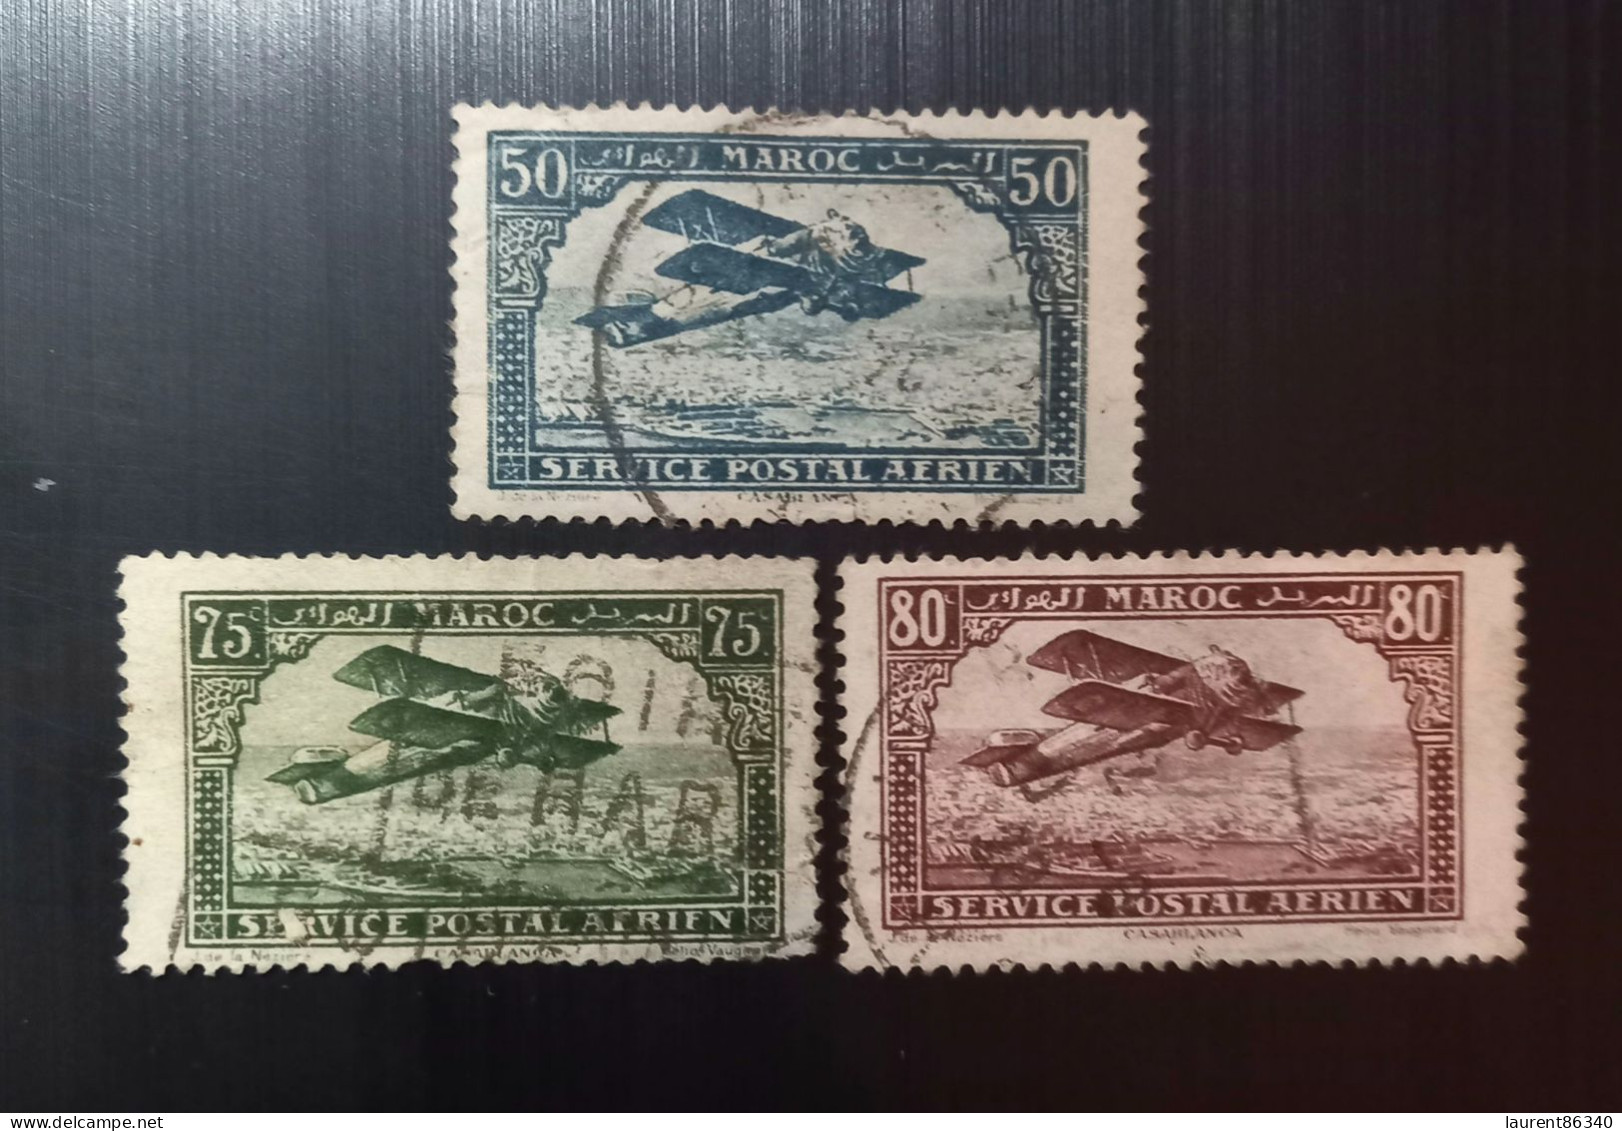 Maroc Poste Française 1922 Airmail - Plane Over Casablanca - Inscribed MAROC Above, POSTAL SERVICE AERIEN Below - Used Stamps